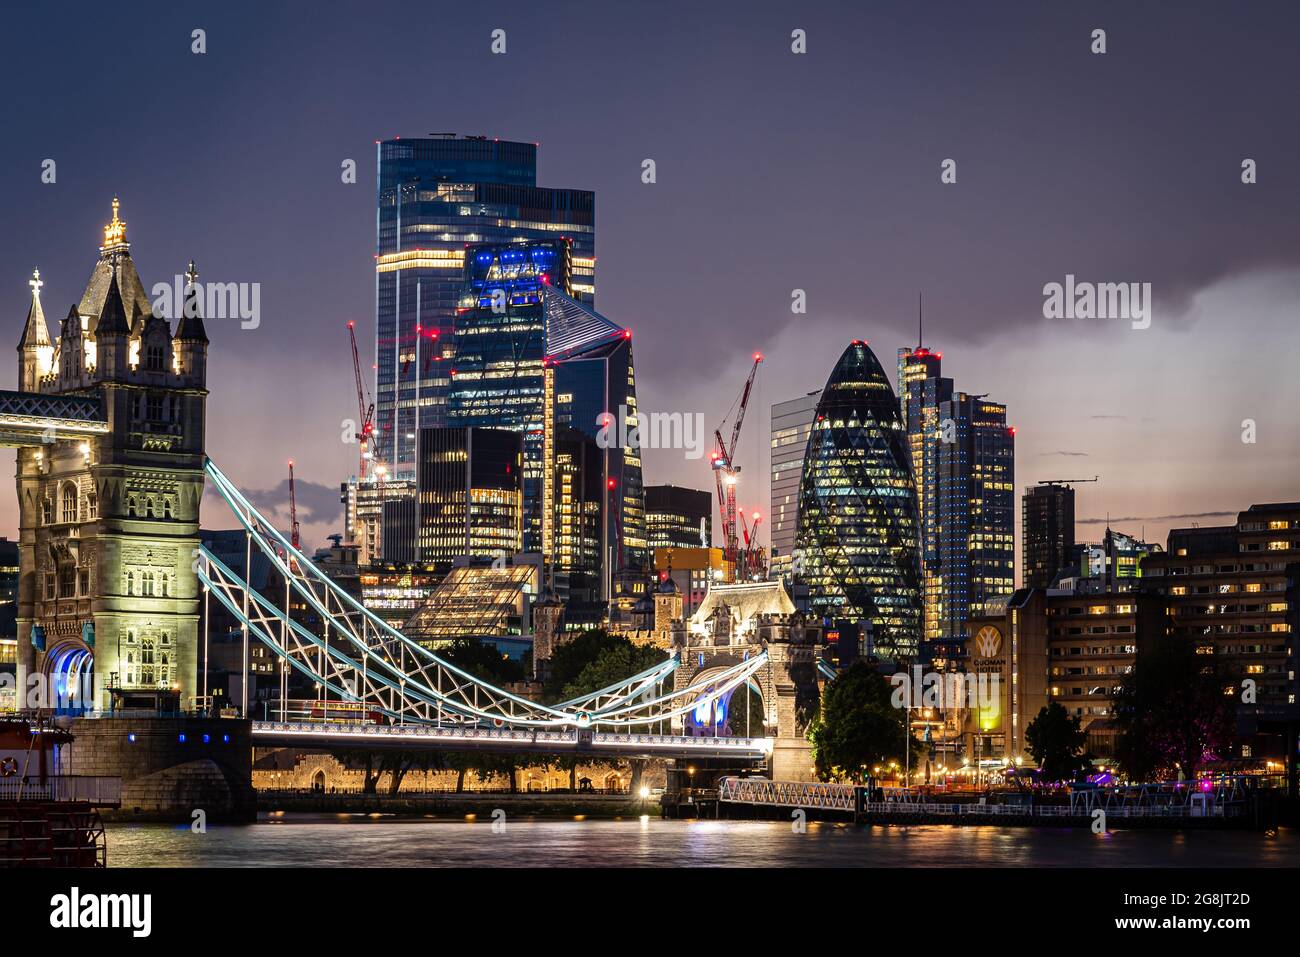 Looking across Tower Bridge towards the financial district, London, UK Stock Photo